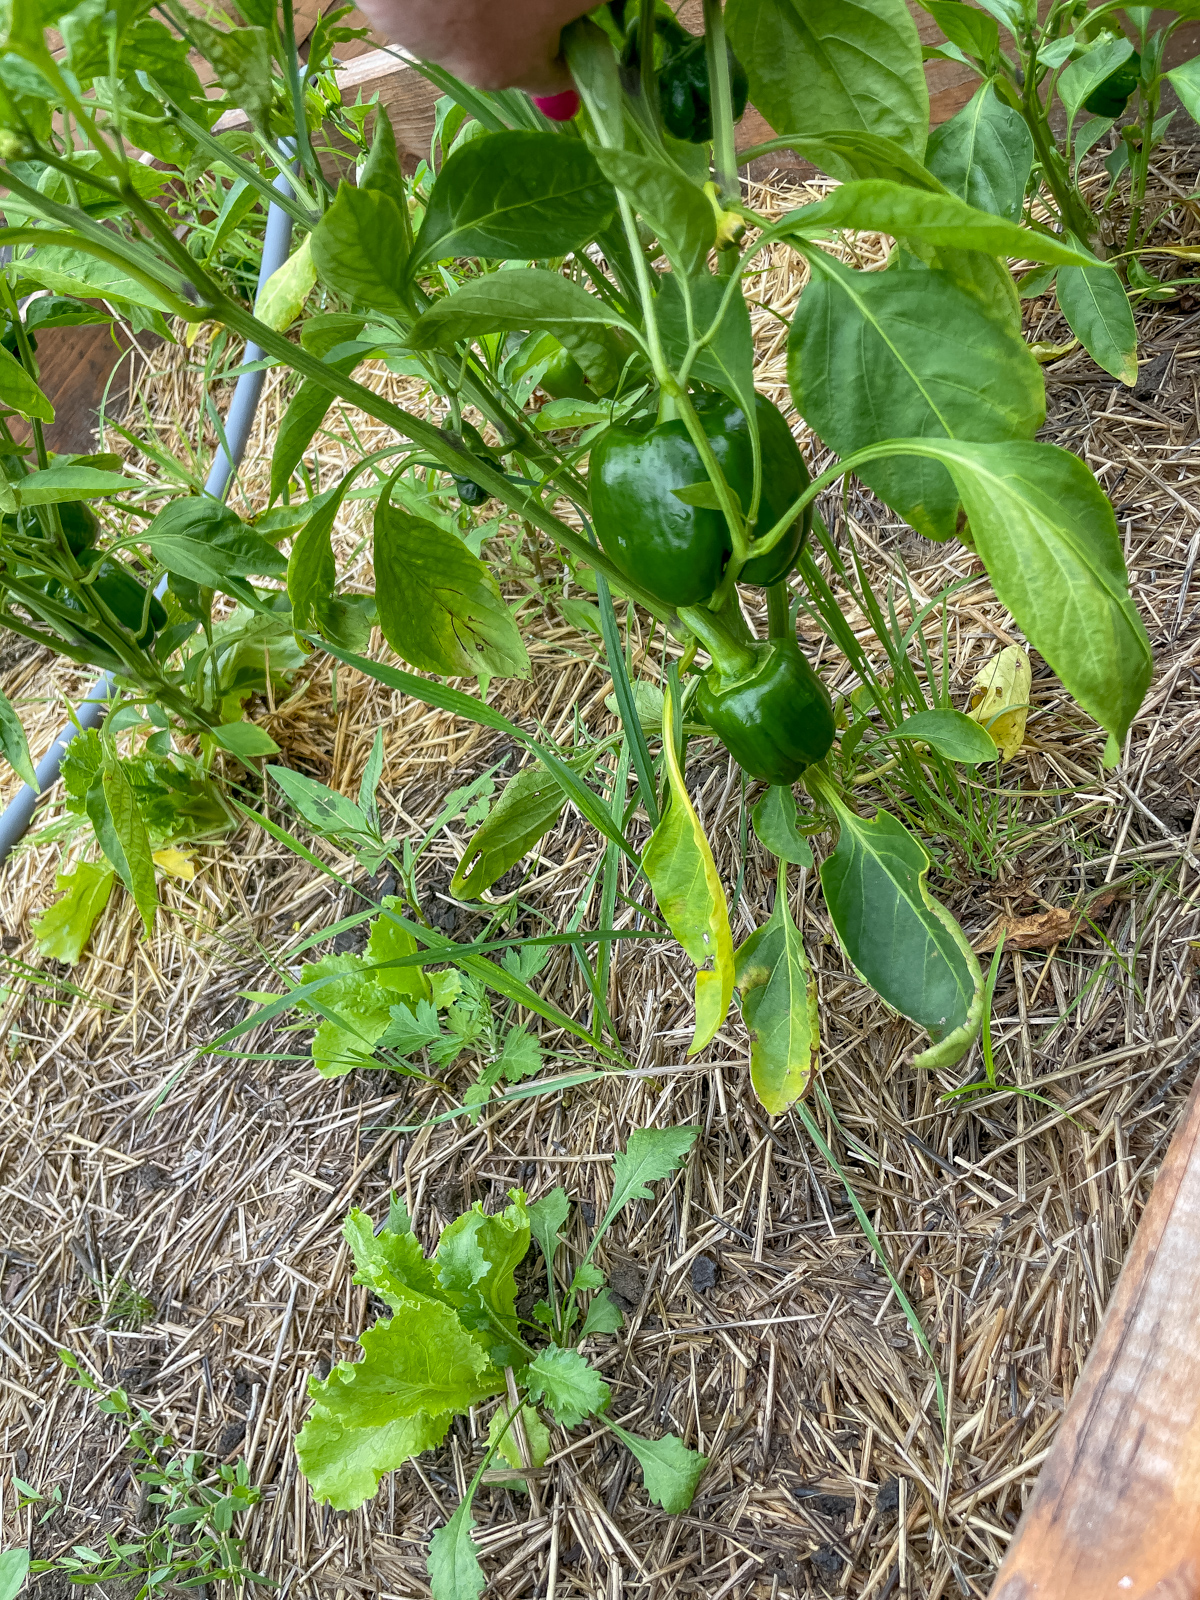 Bell peppers in the garden